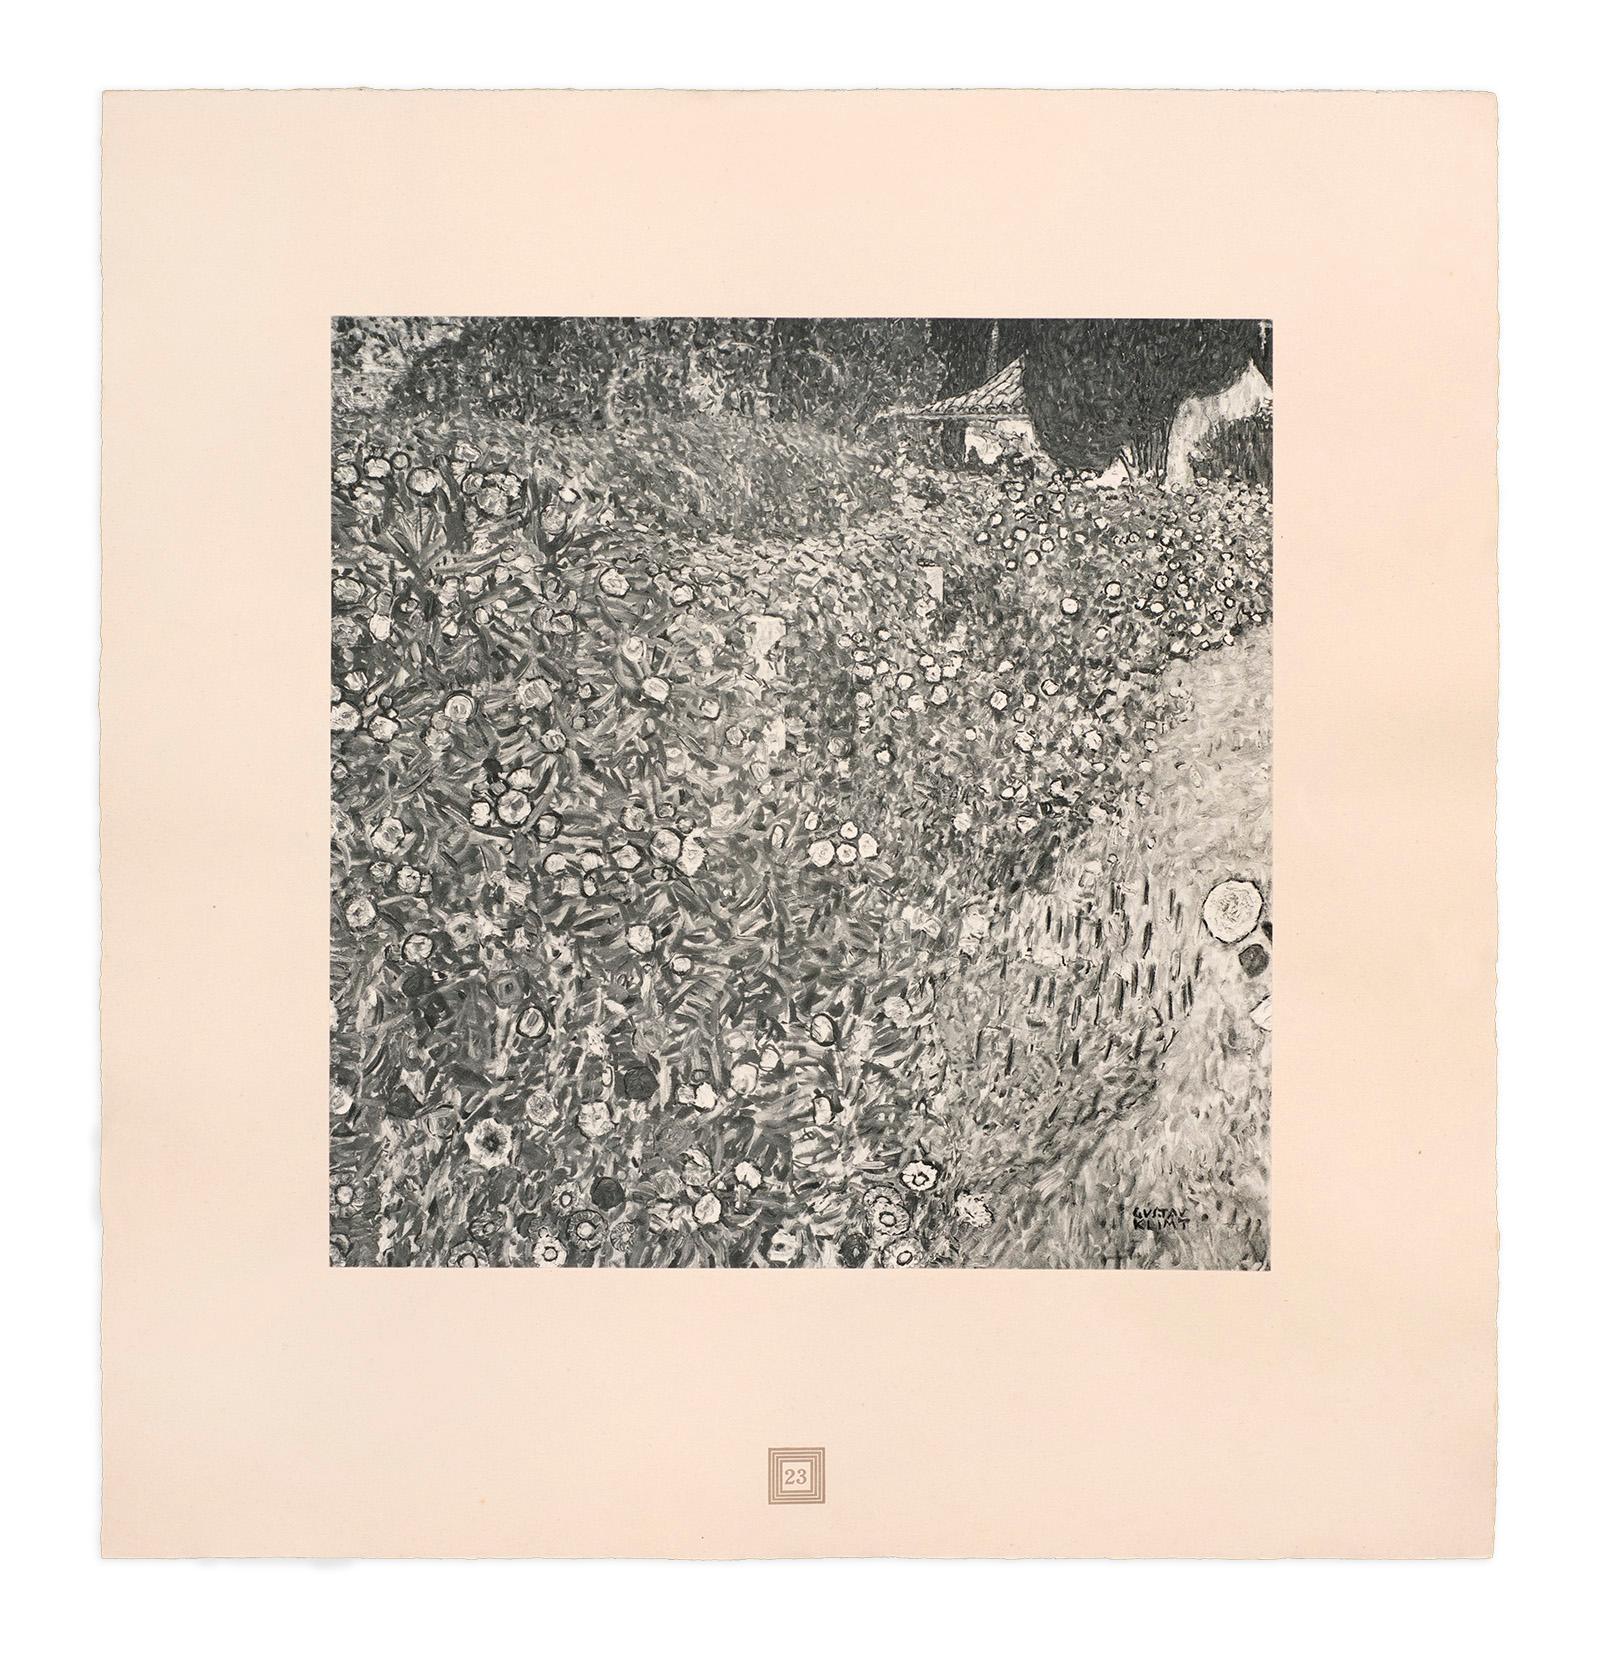 Italian Garden Landscape, Gustav Klimt An Aftermath collotype, 1931 - Print by (after) Gustav Klimt